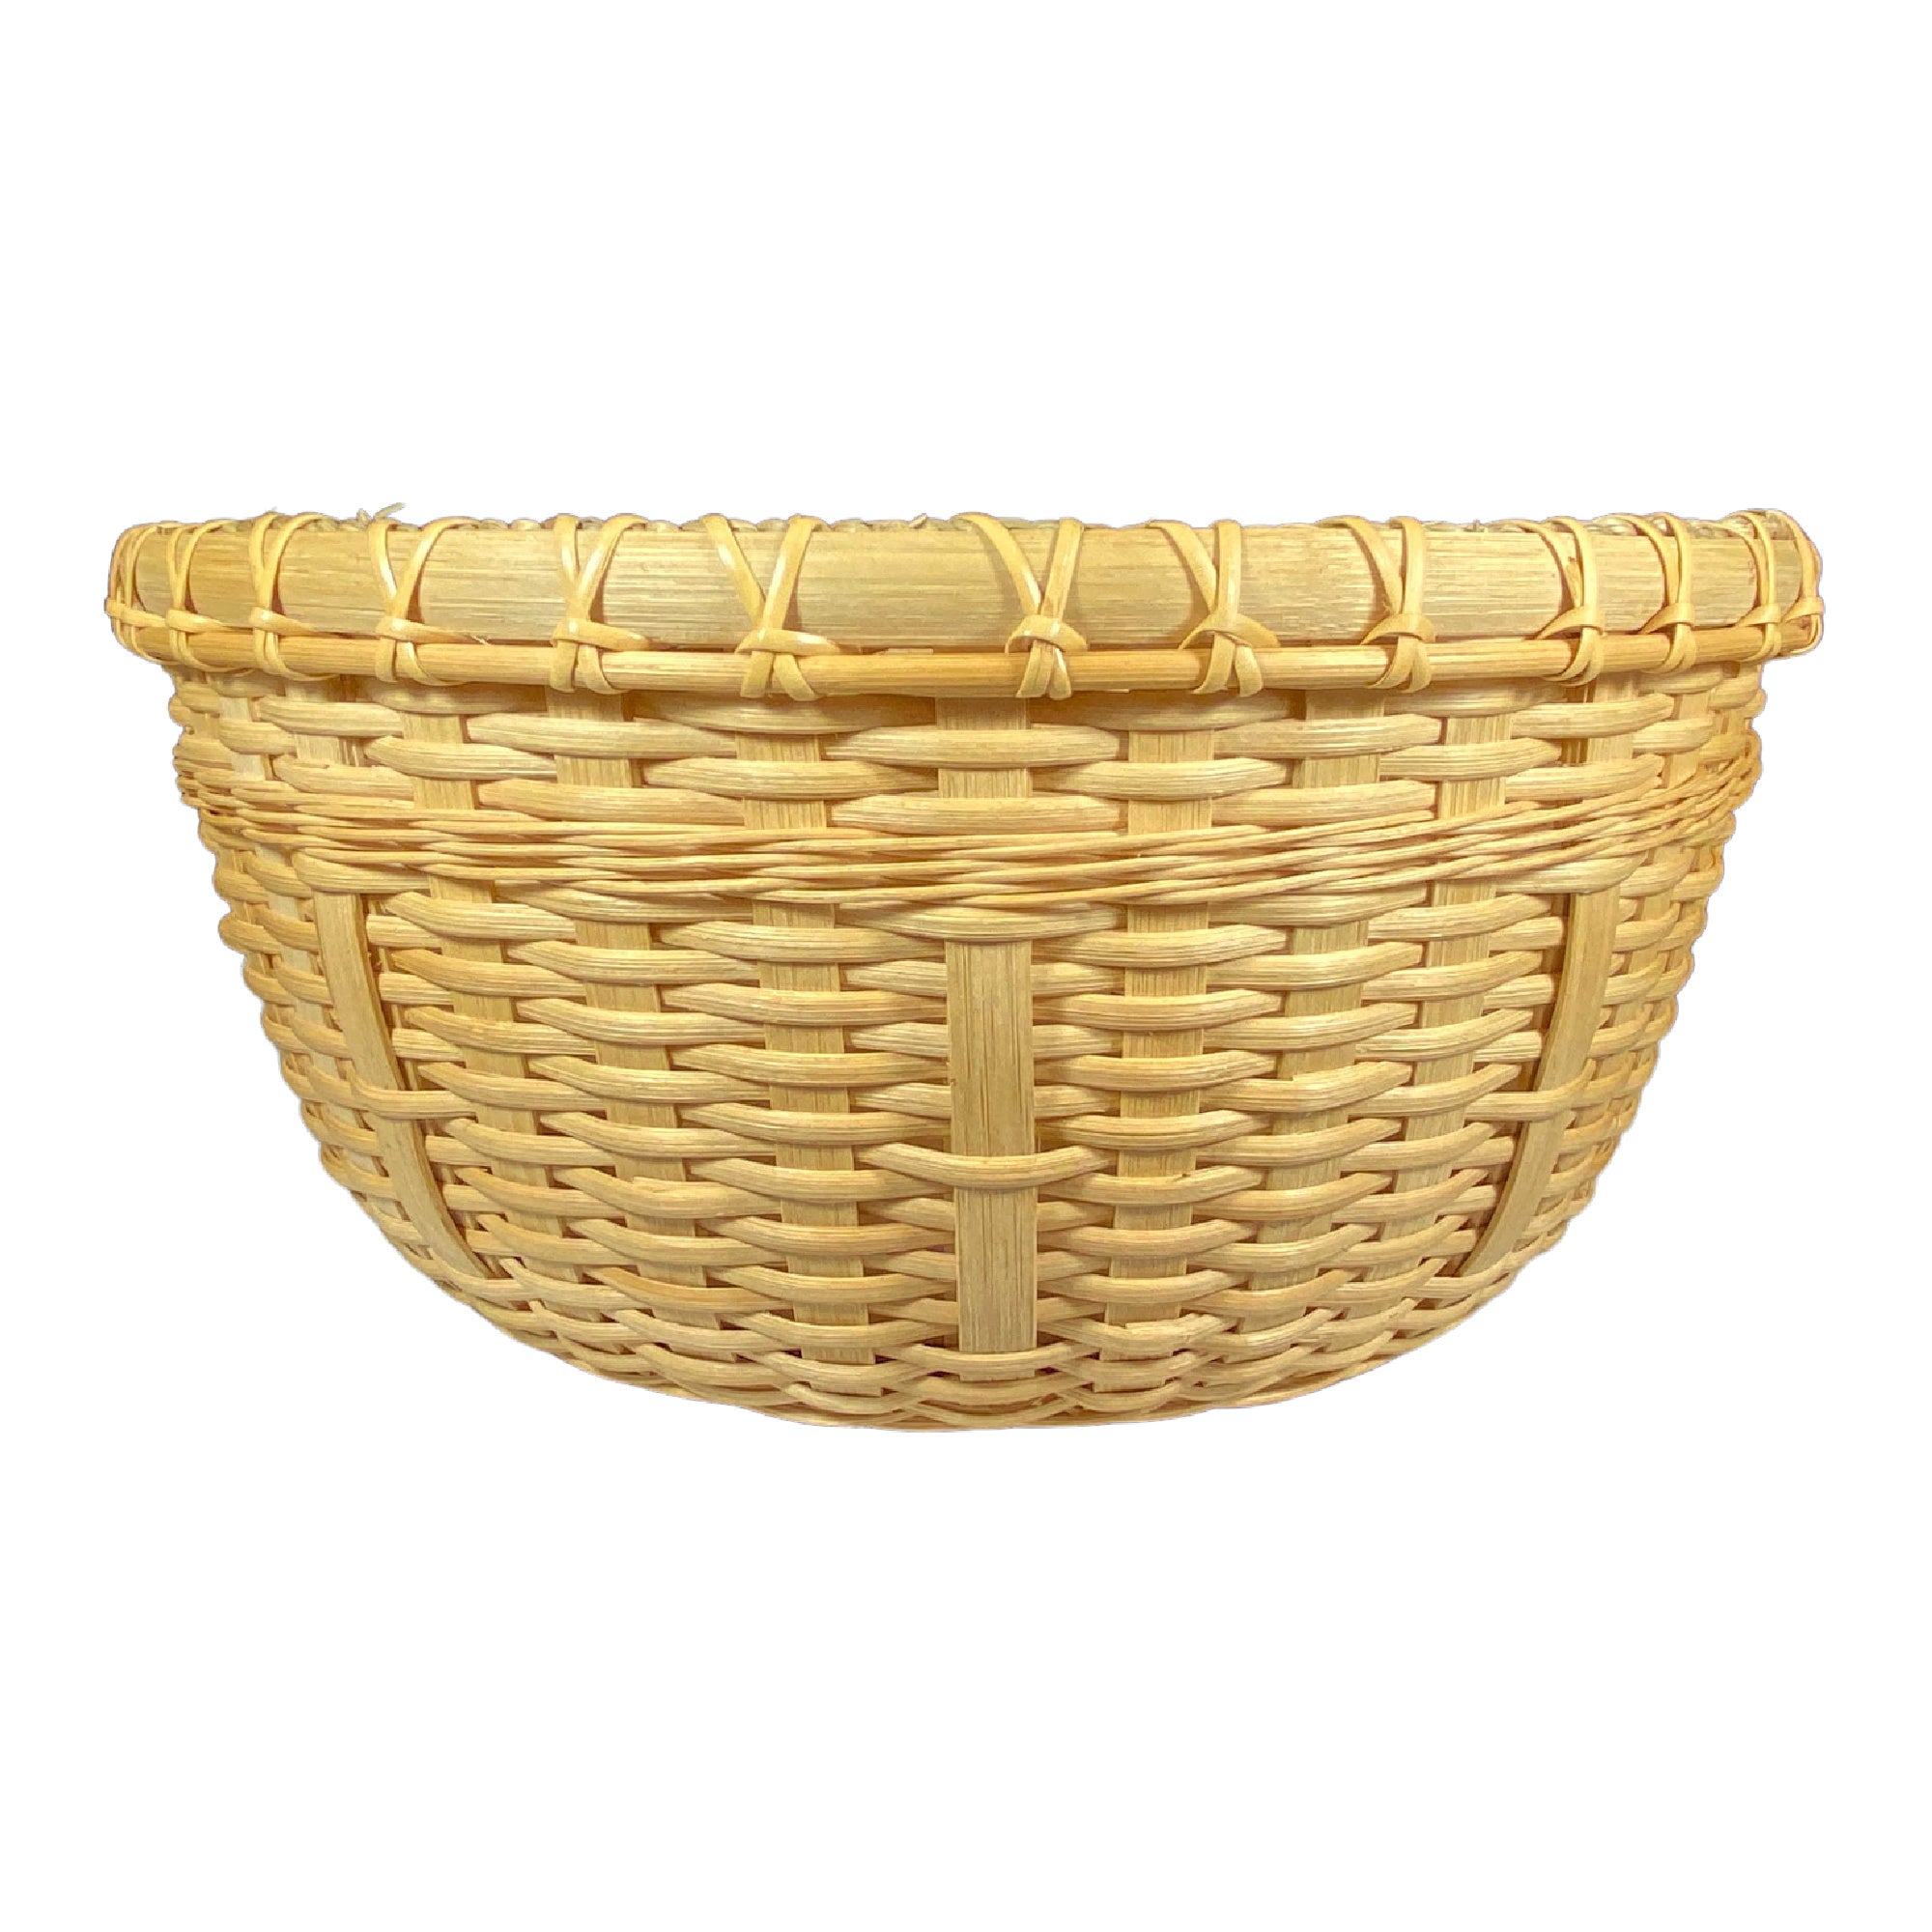 wool basket round, sewing basket, made from bamboo weaving